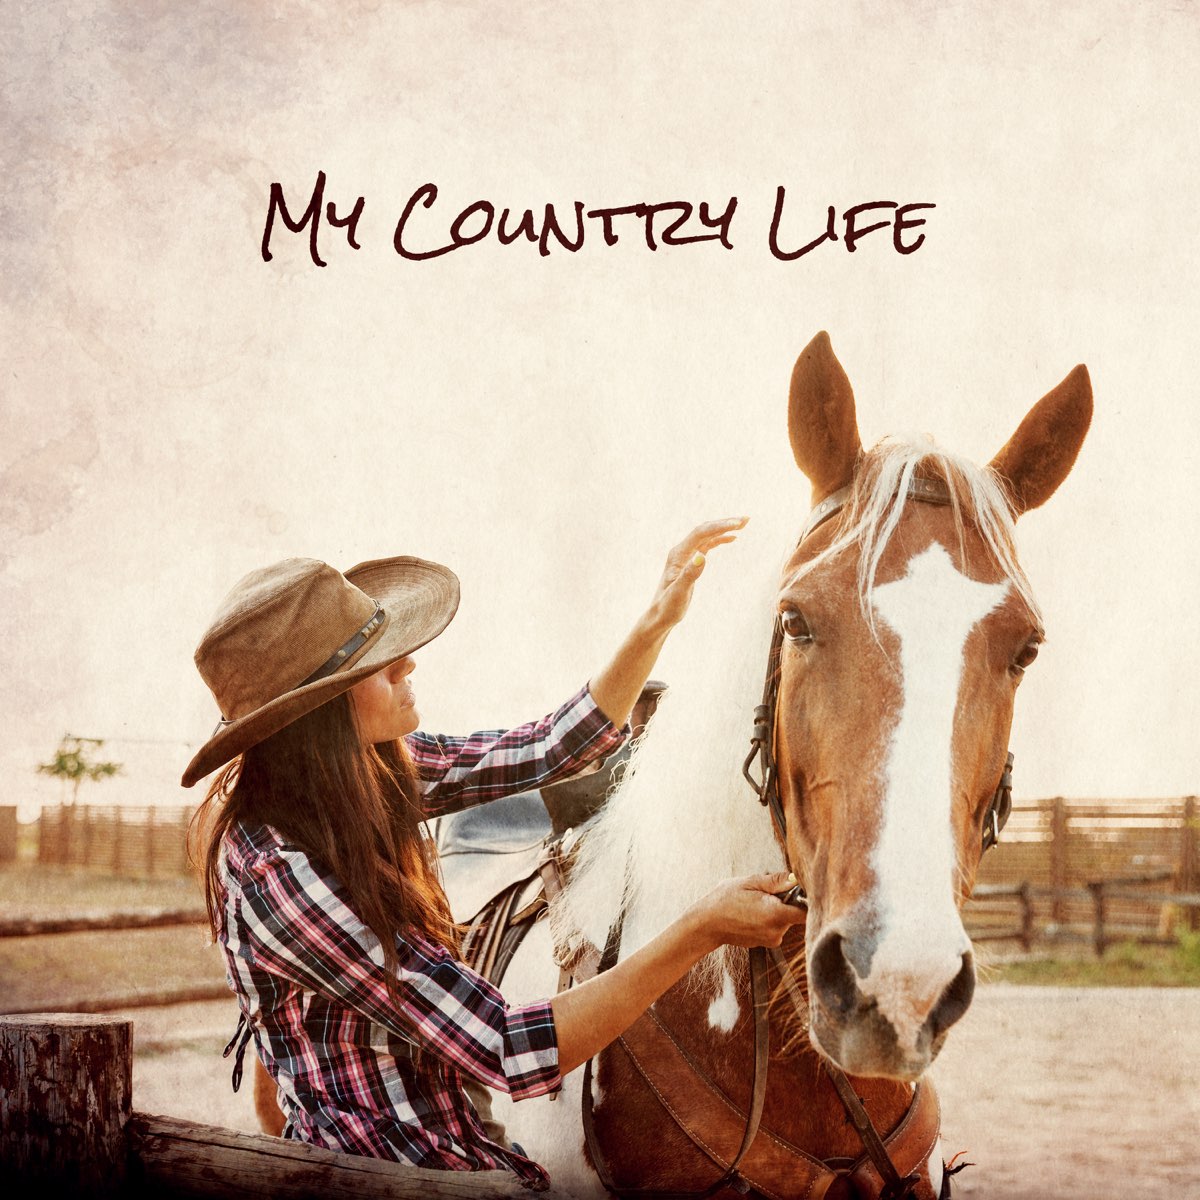 Кантри жизнь. Техасский Кантри. Кантри группа. Country Life album. My country beautiful